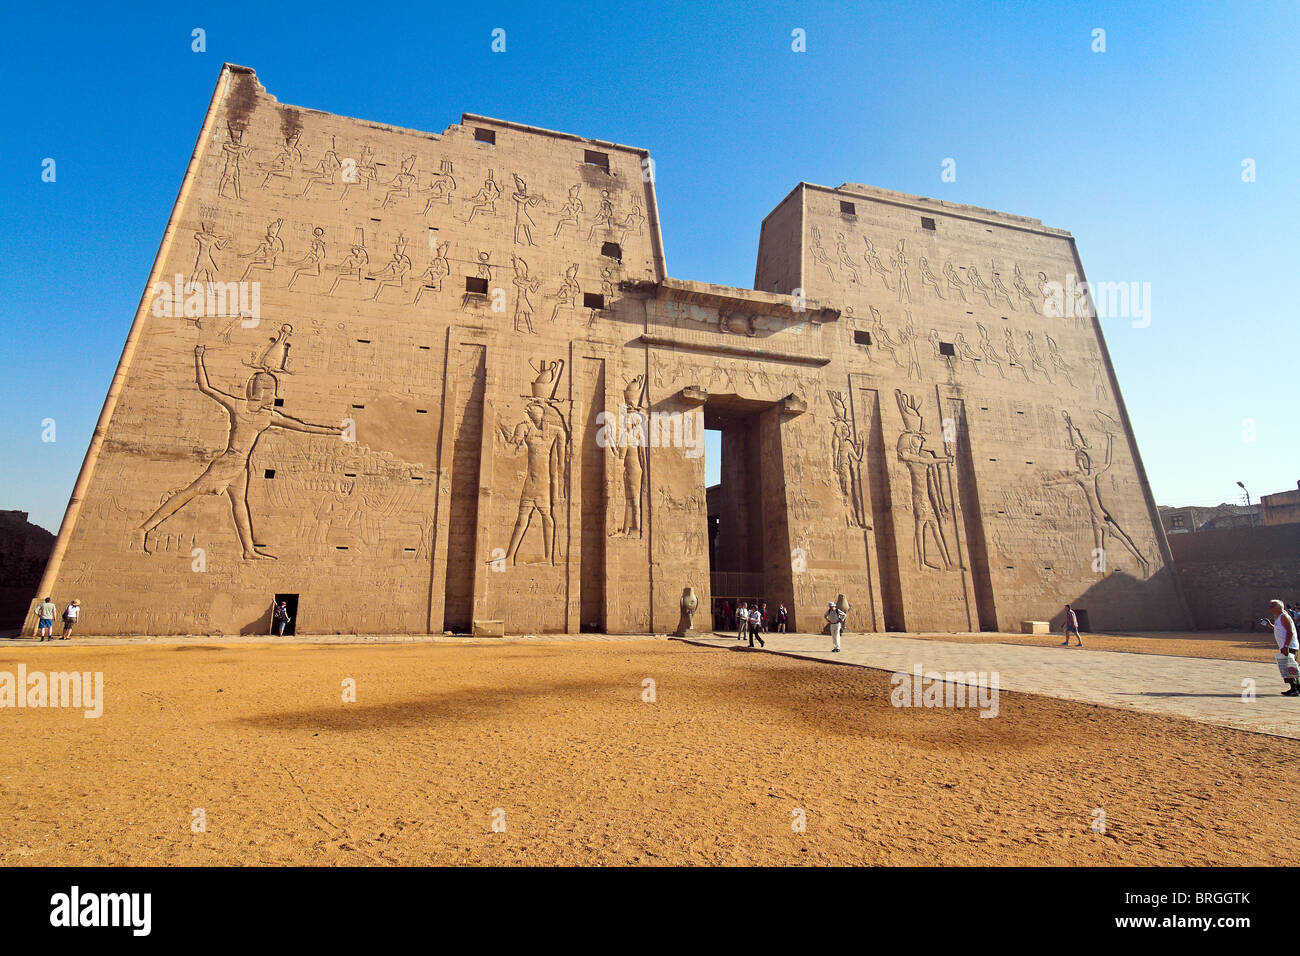 Africa, Egypt, Edfu, Horus Tempel, impressive building from the Ptolemaic period. Stock Photo